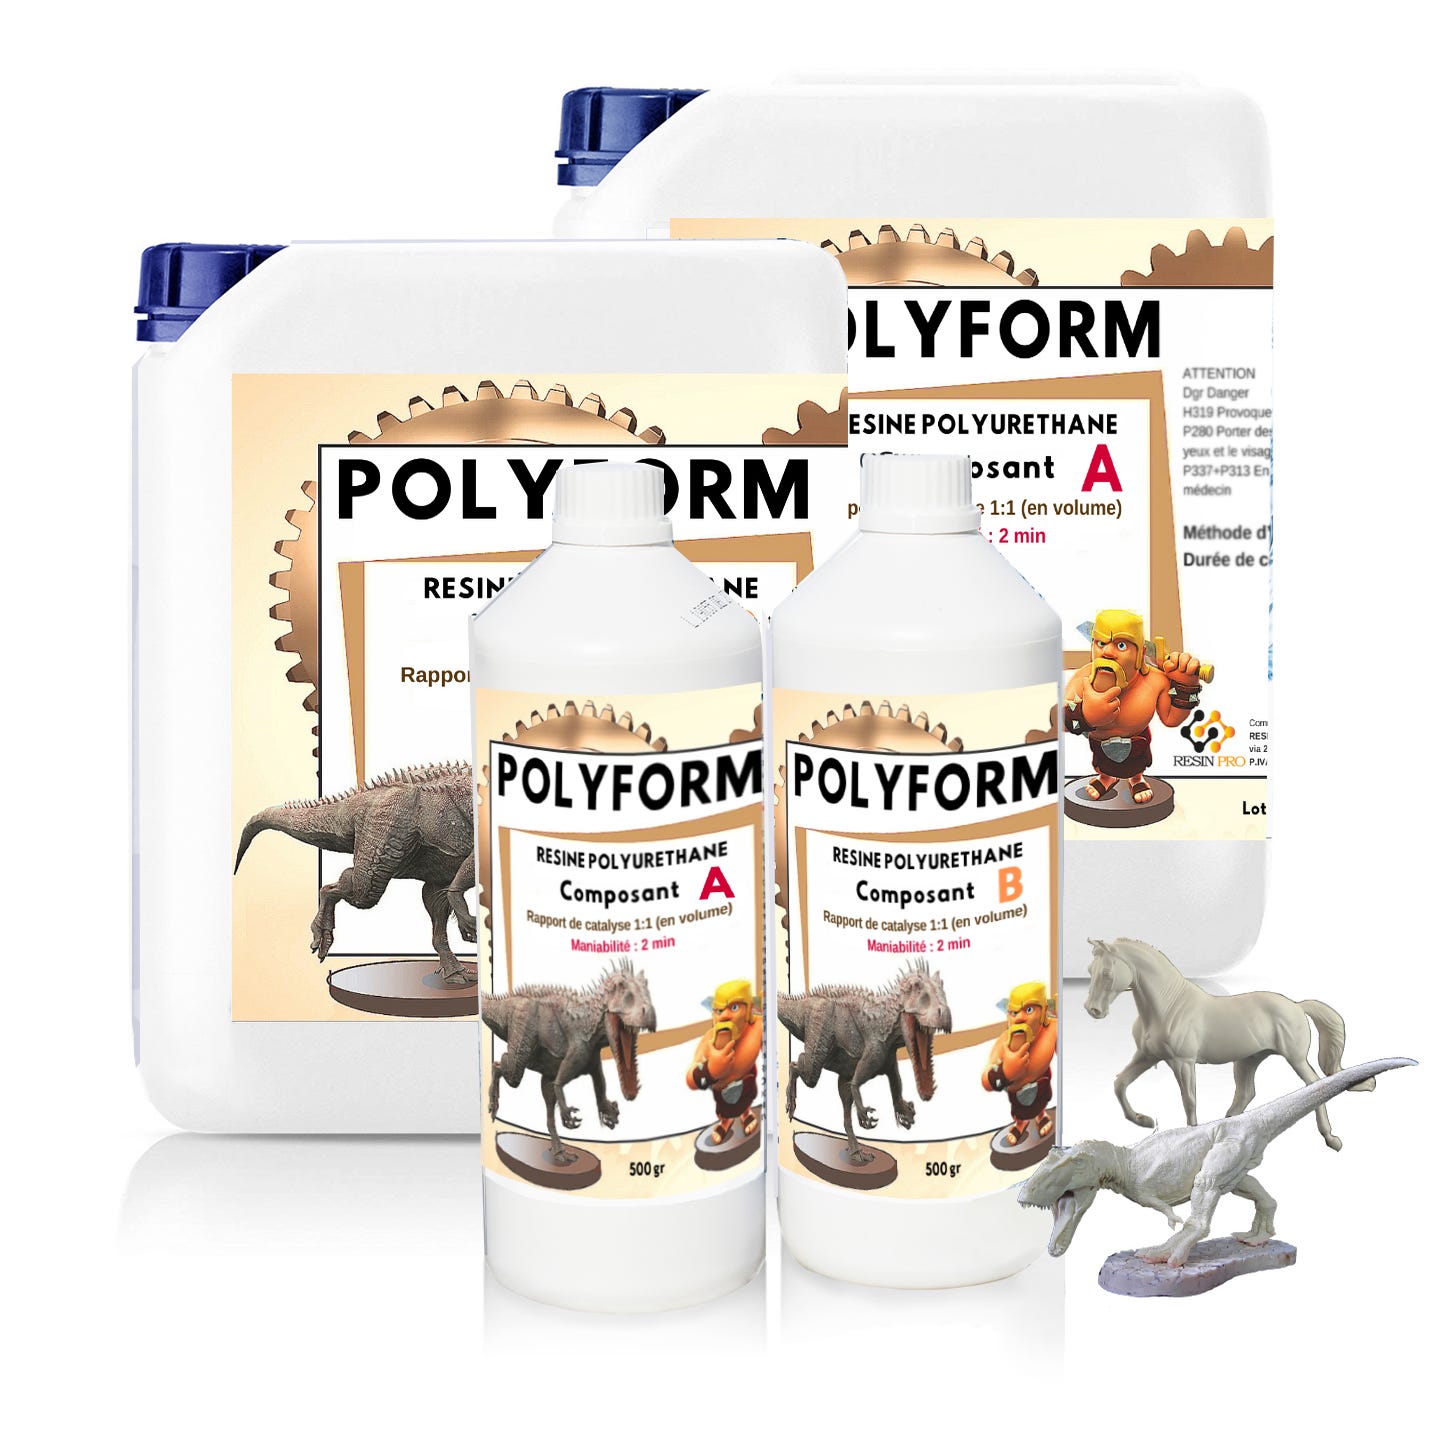 POLYFORM – Résine Polyuréthane Bi composant - 1 KG – Prête en 5